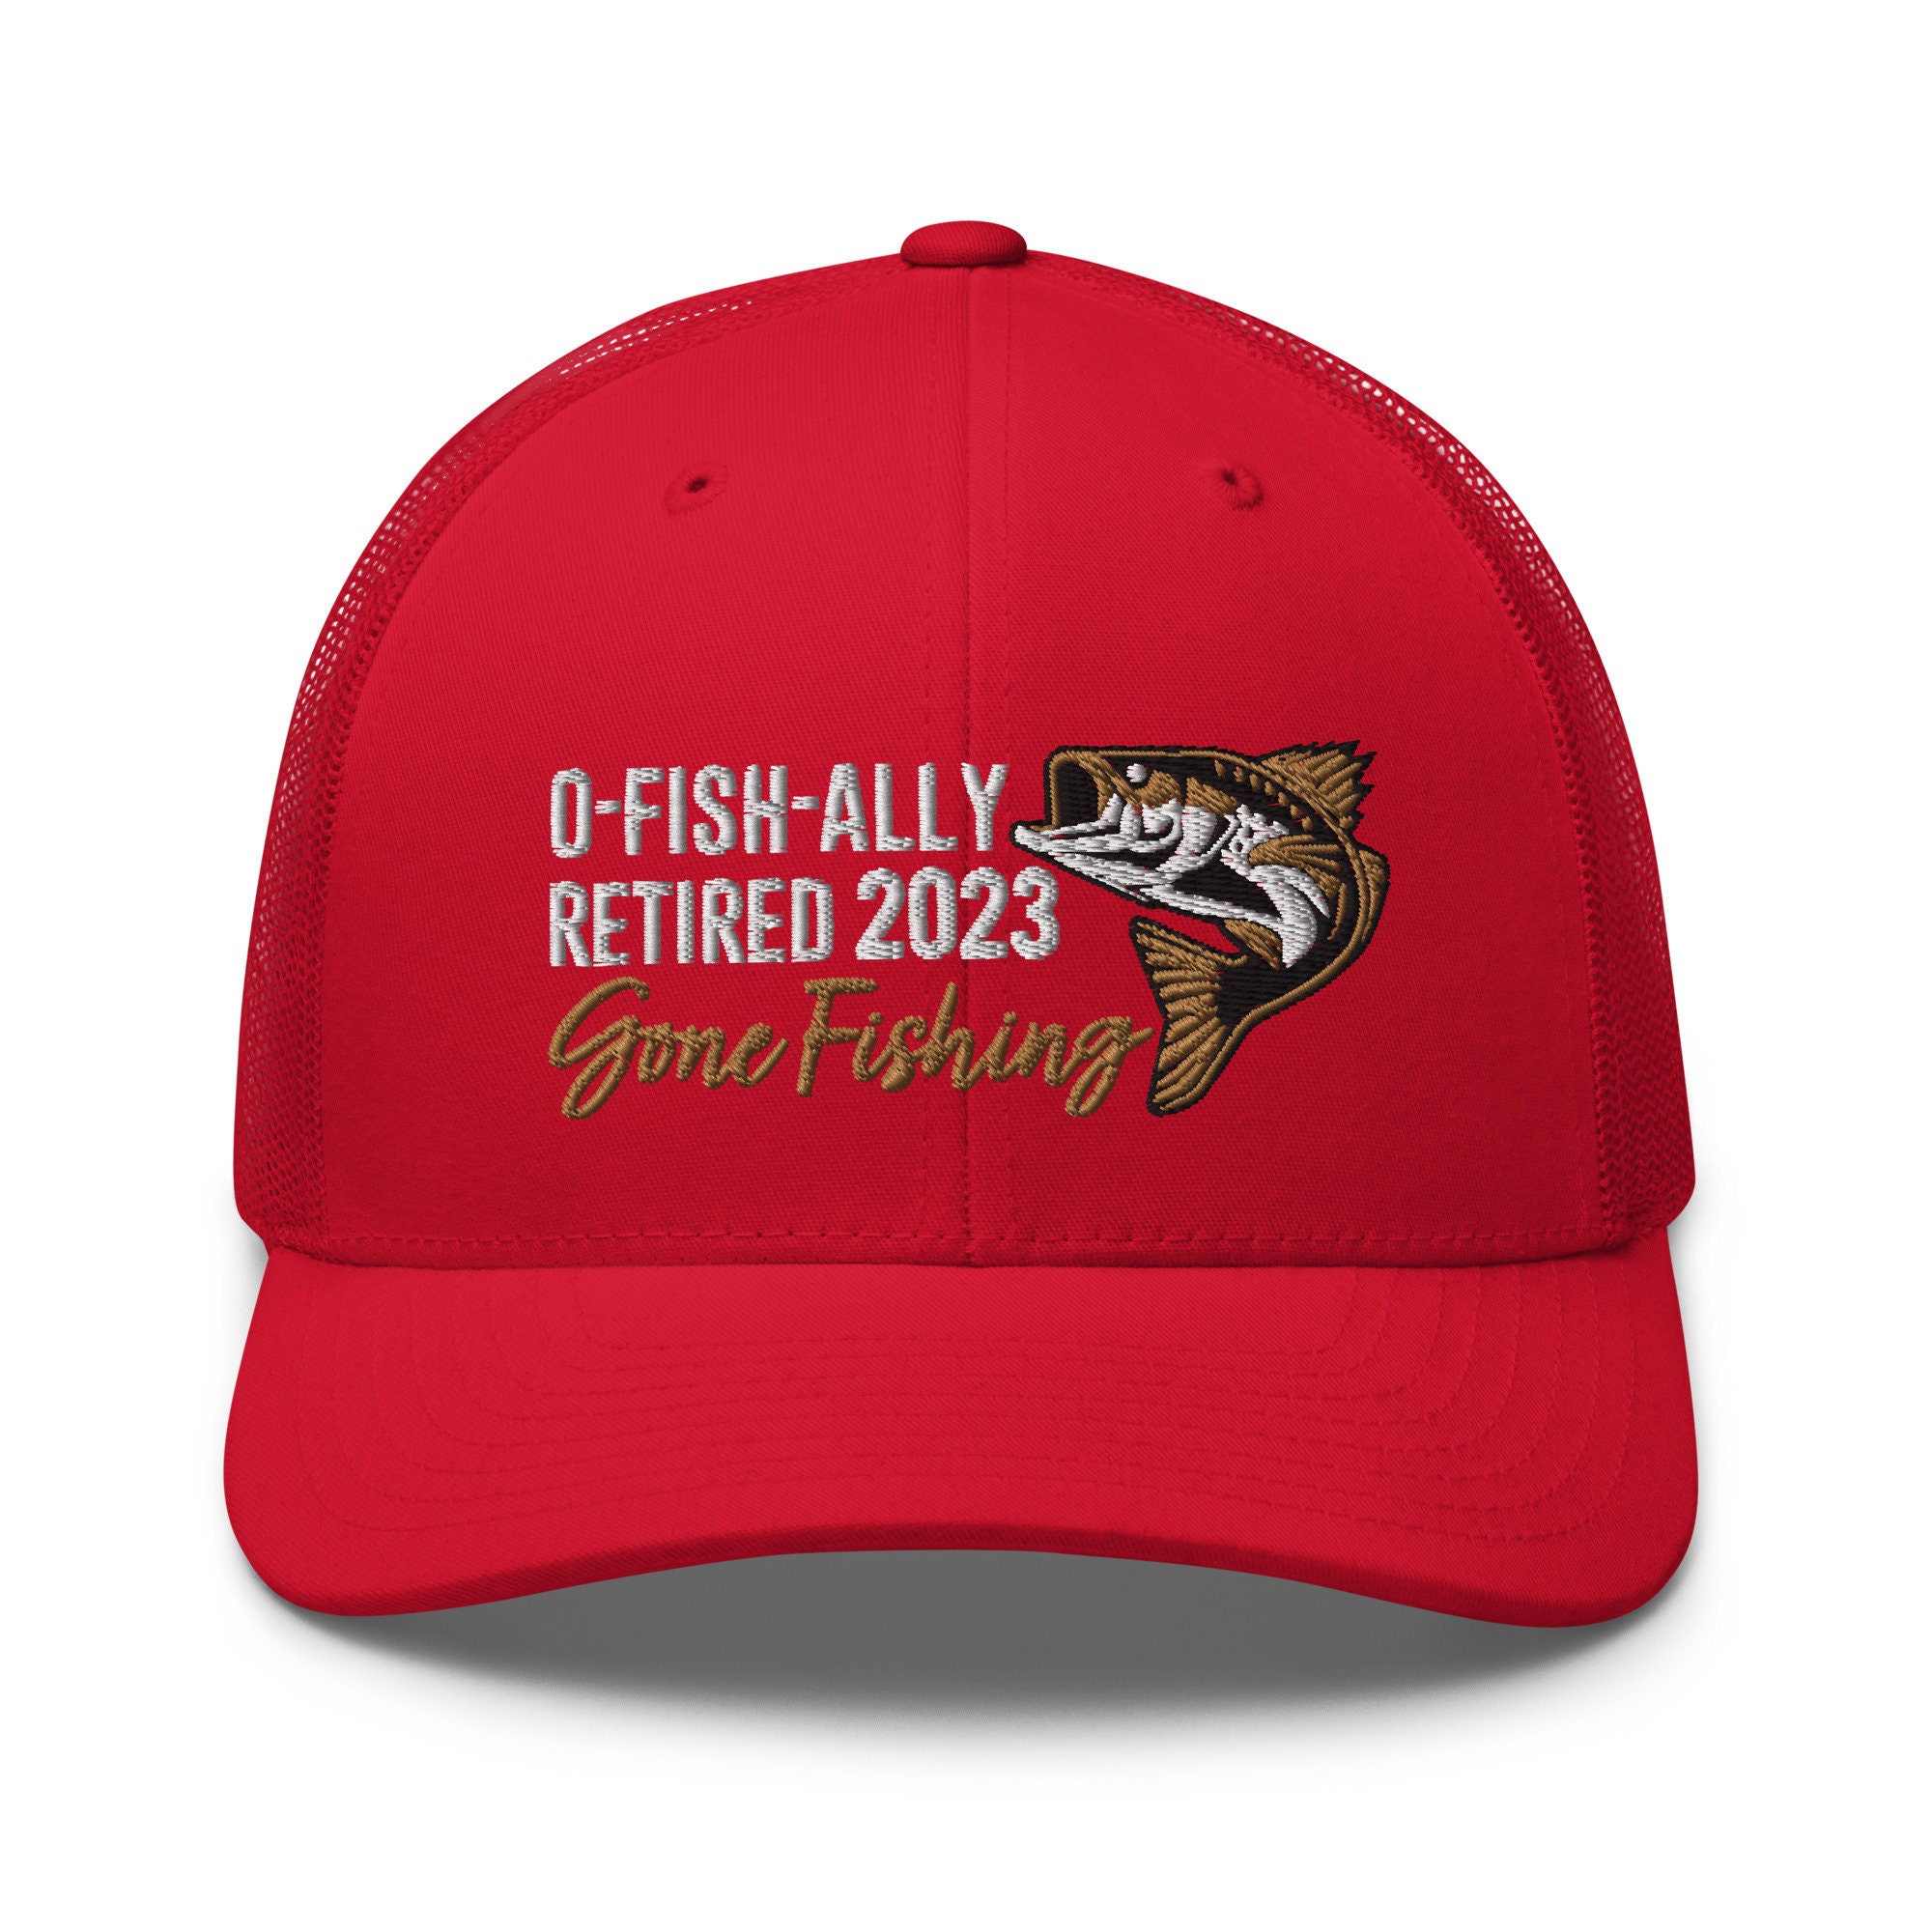 OH-Fish-Ally Retired, Funny Retirement Gift Men Flexfit Baseball Cap S/M Cap